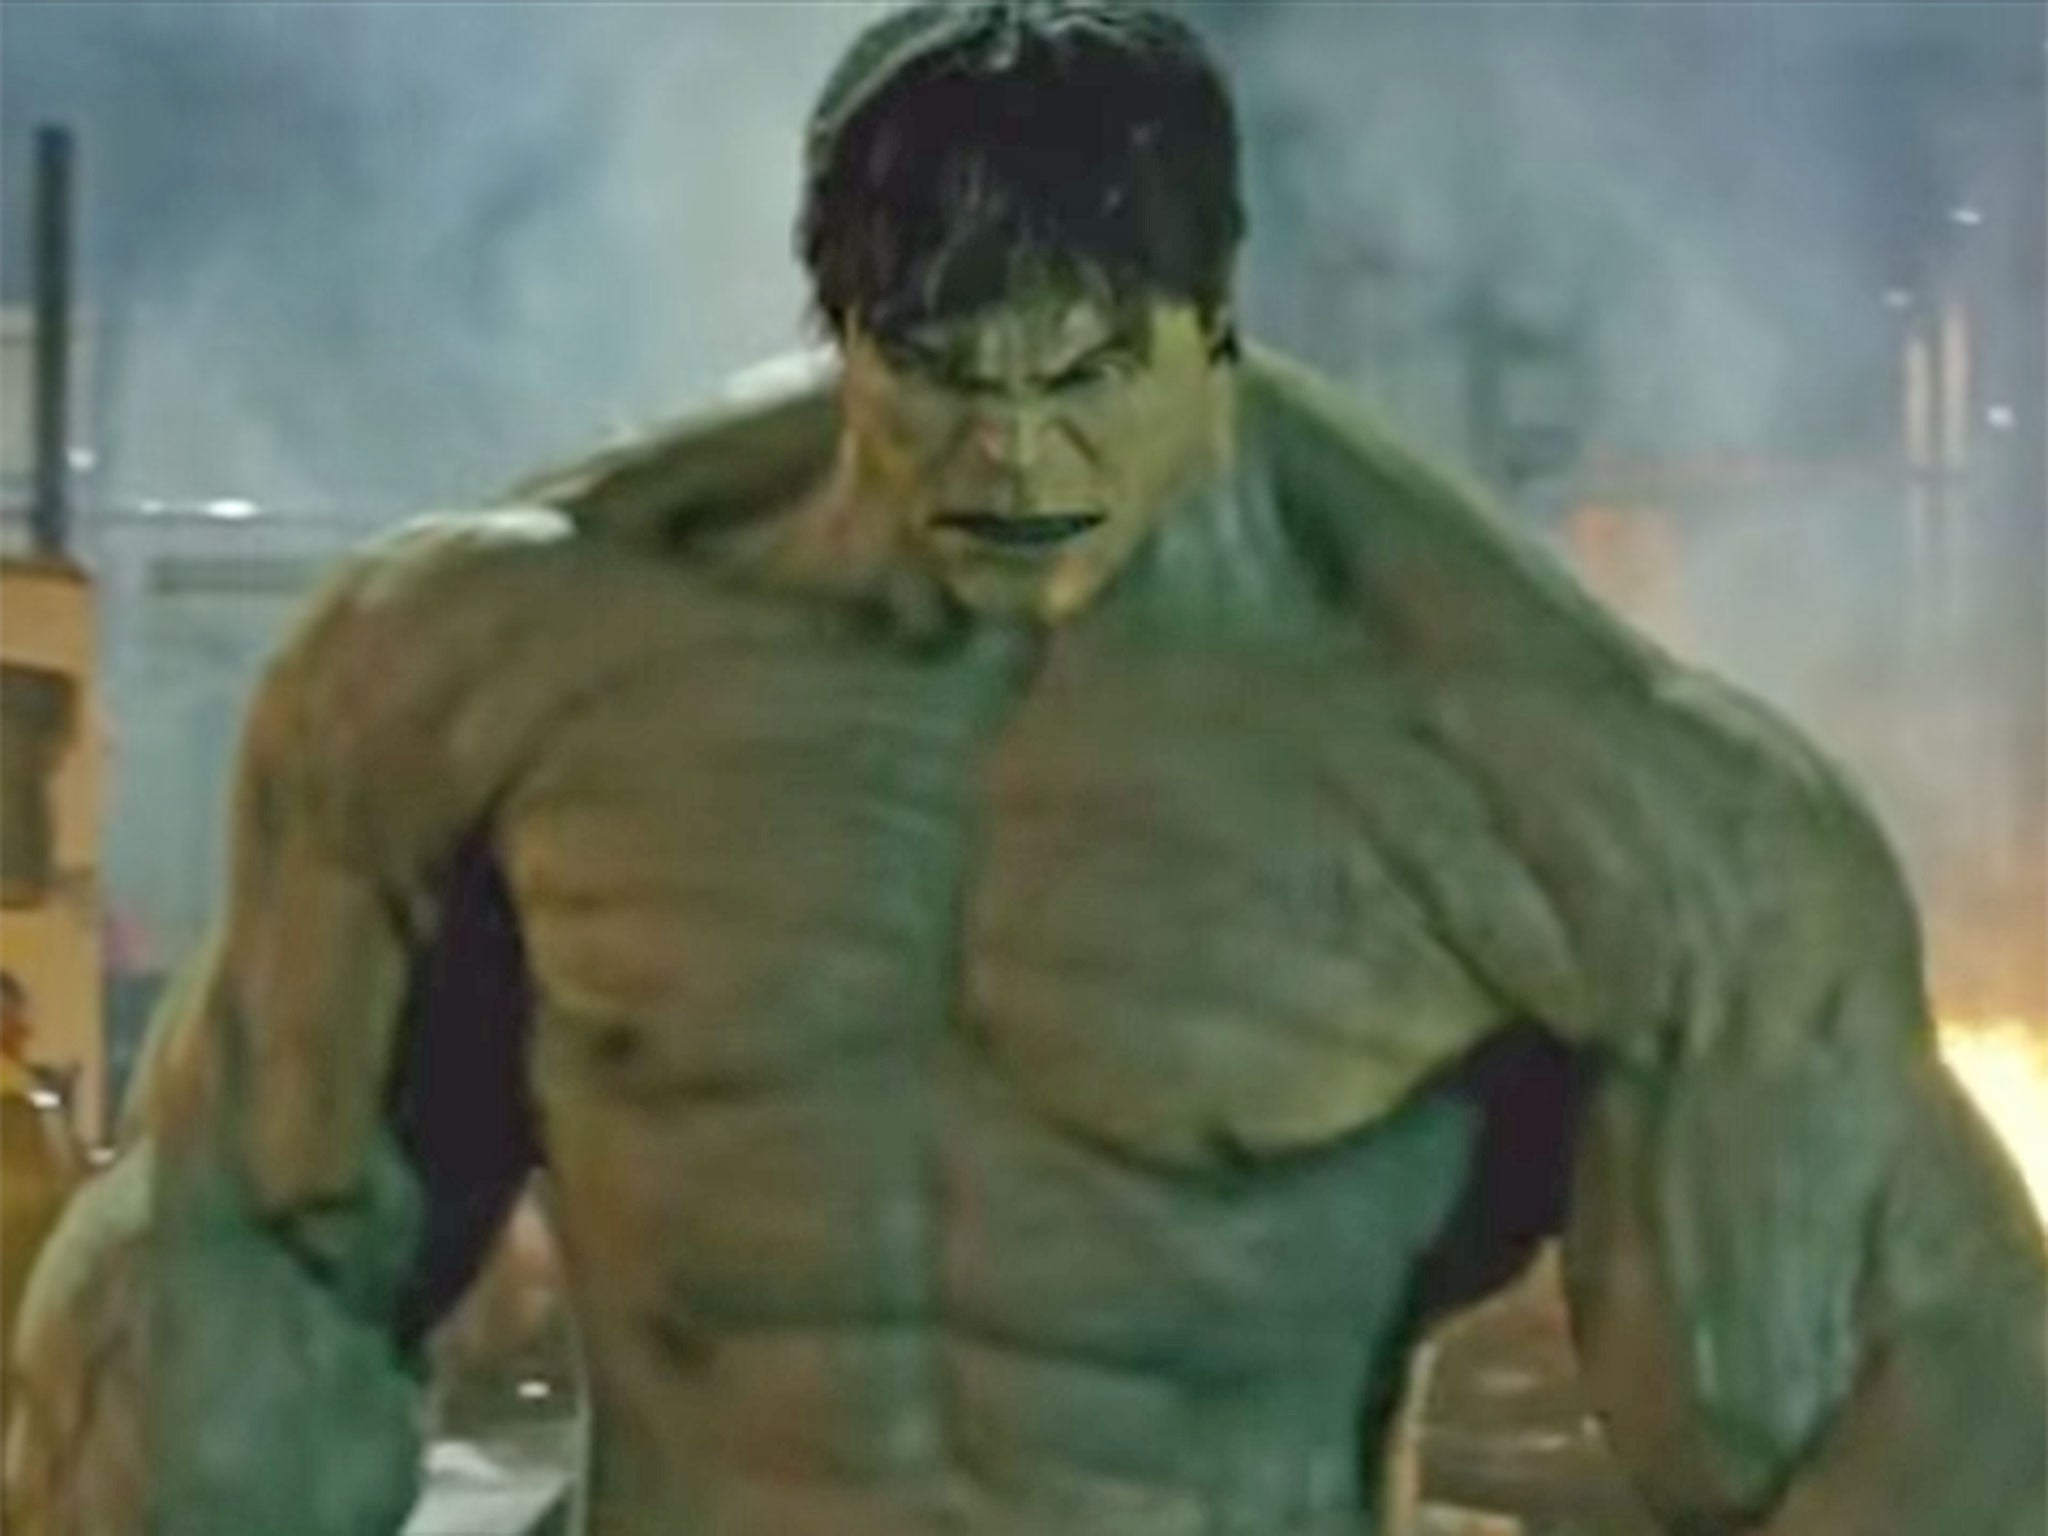 Edward Norton as Hulk in The Incredible Hulk